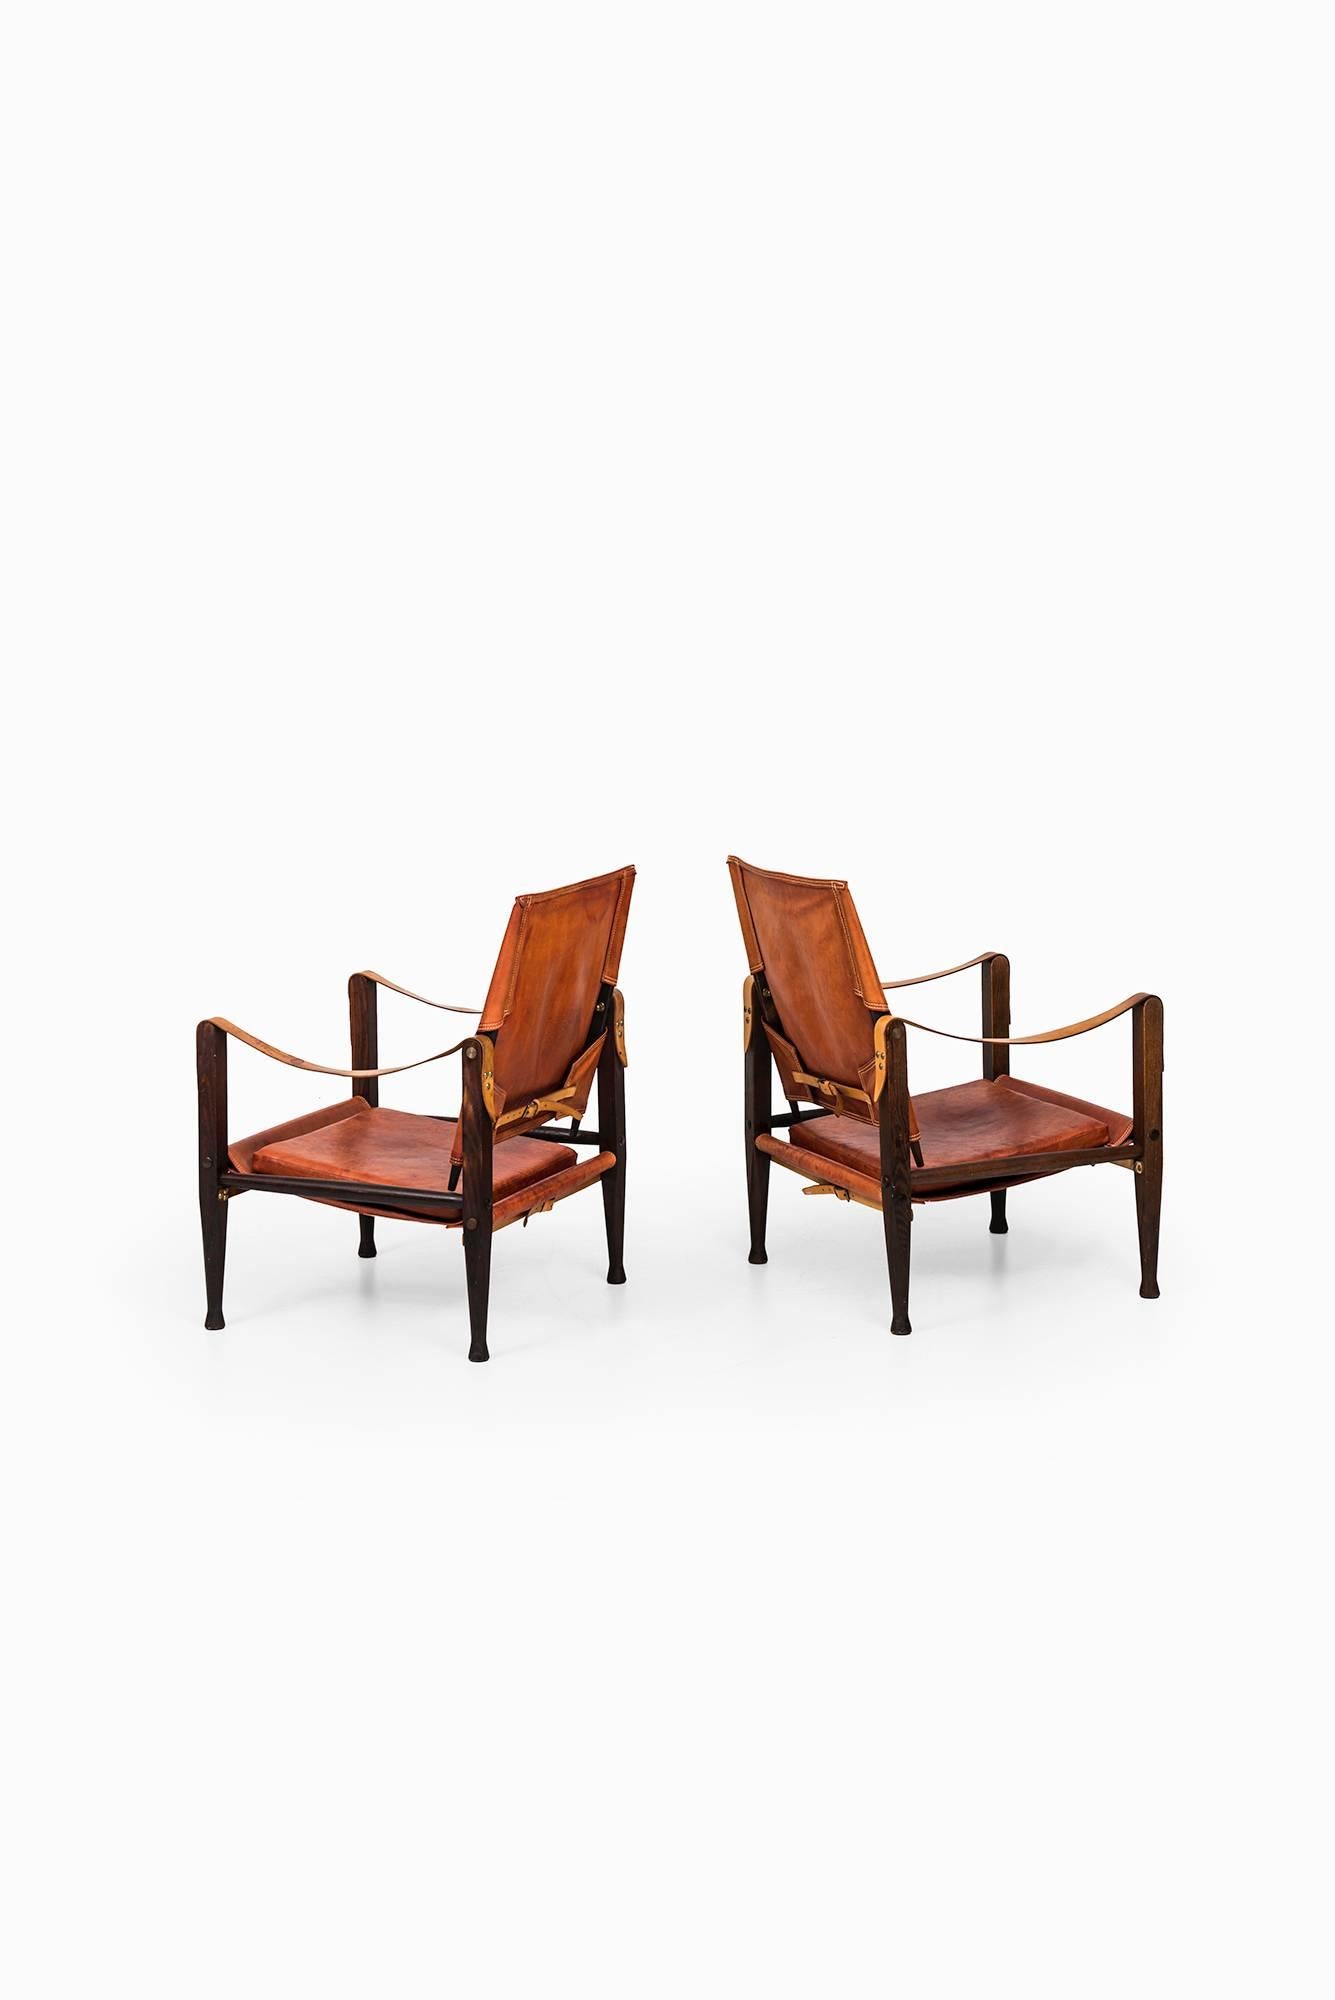 Kaare Klint Safari Chairs by Rud Rasmussen in Denmark 1